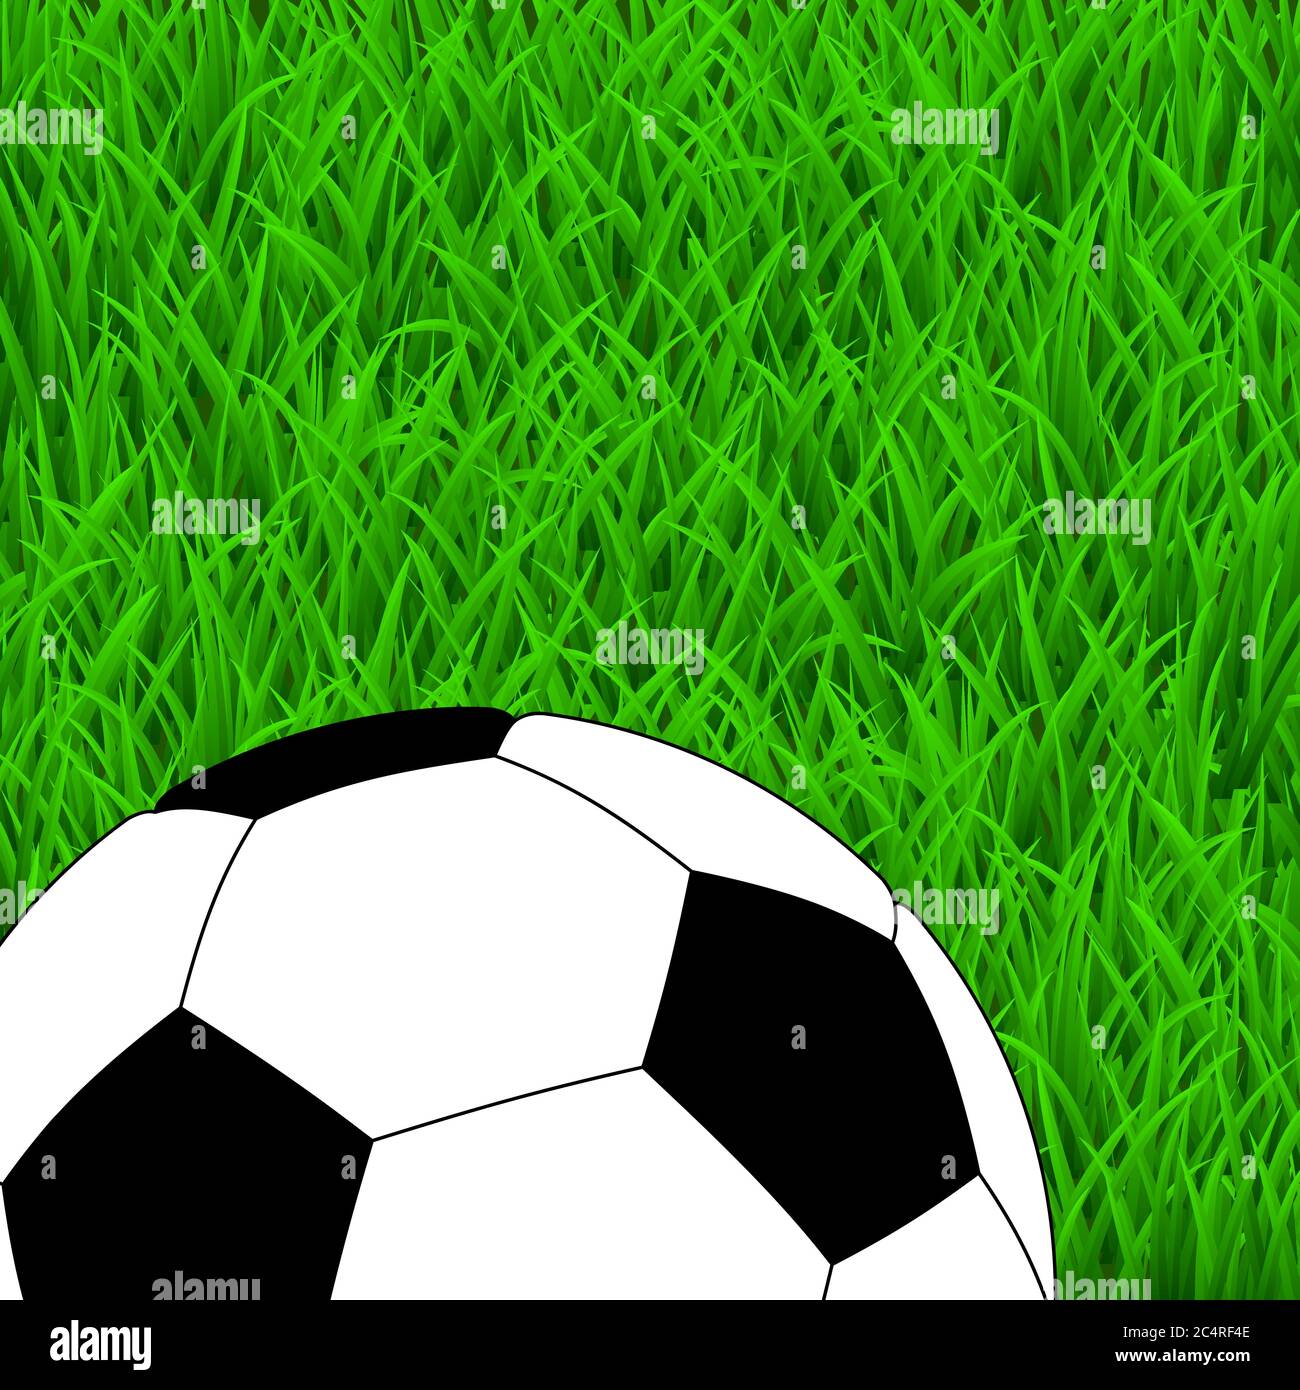 Fußball auf dem grünen Gras. Draufsicht Stock Vektor